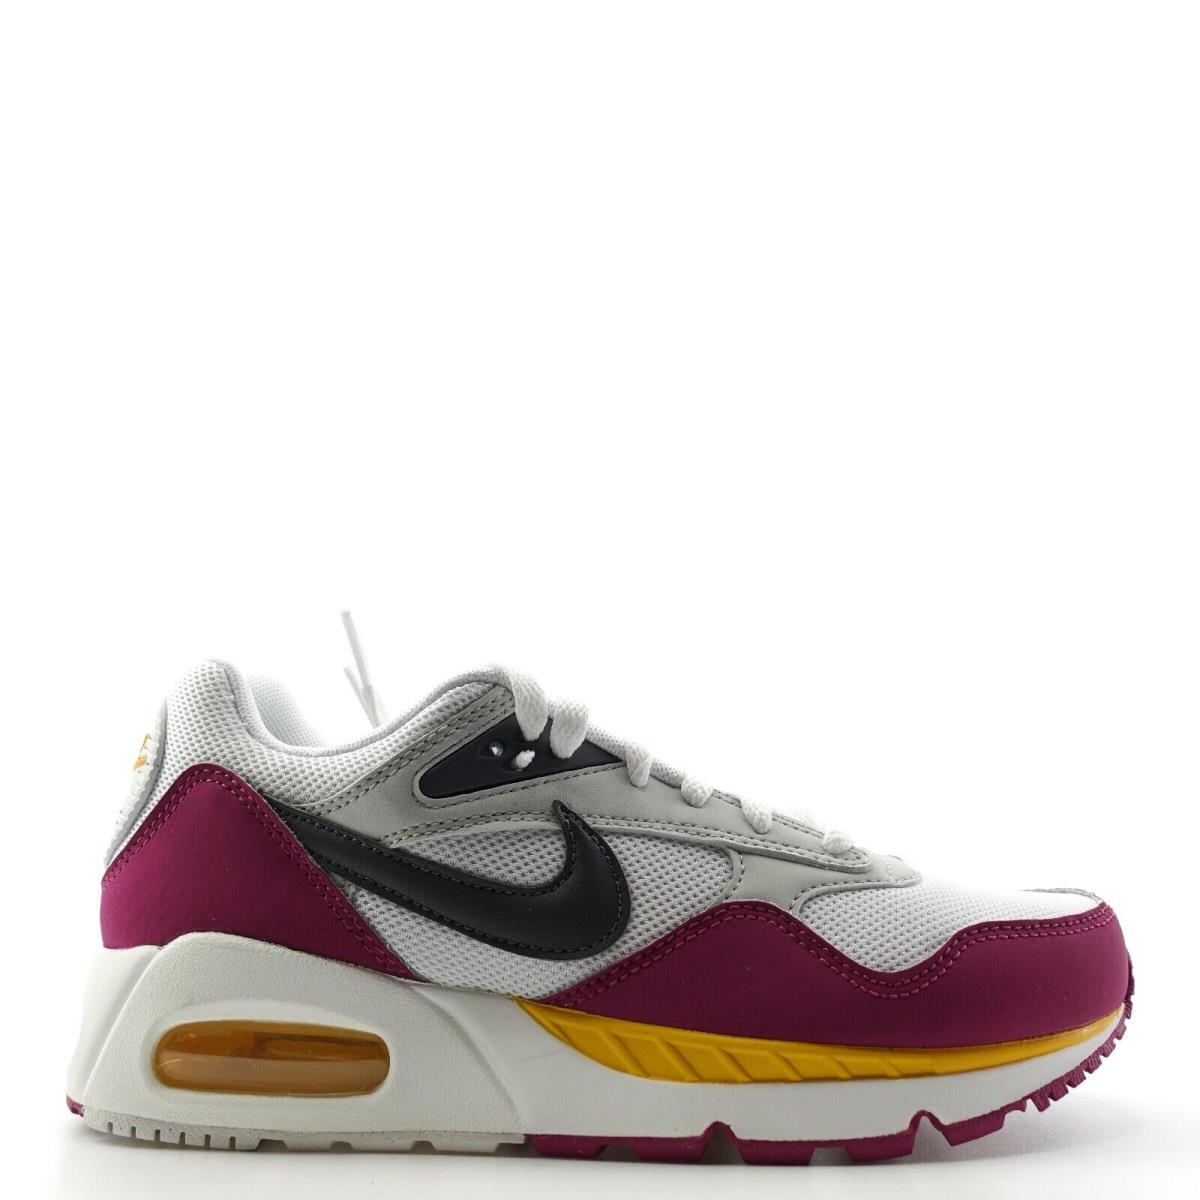 Nike Air Max Correlate White Purple Sneakers Shoes Womens Size 6.5 511417 100